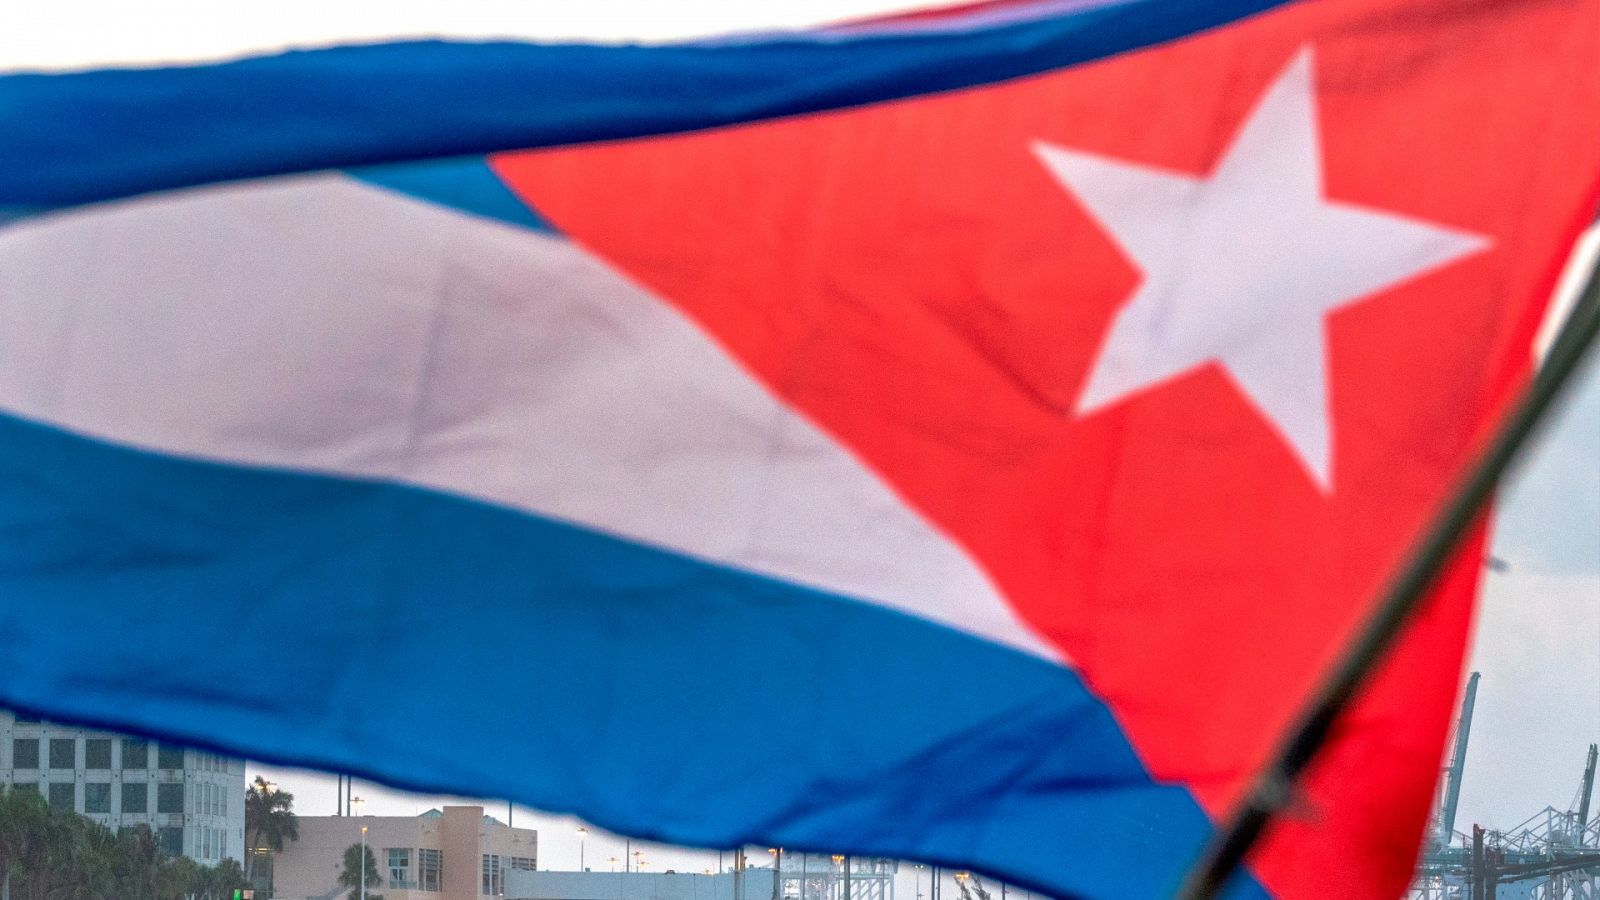 Un barco de la flotilla portando la bandera de Cuba